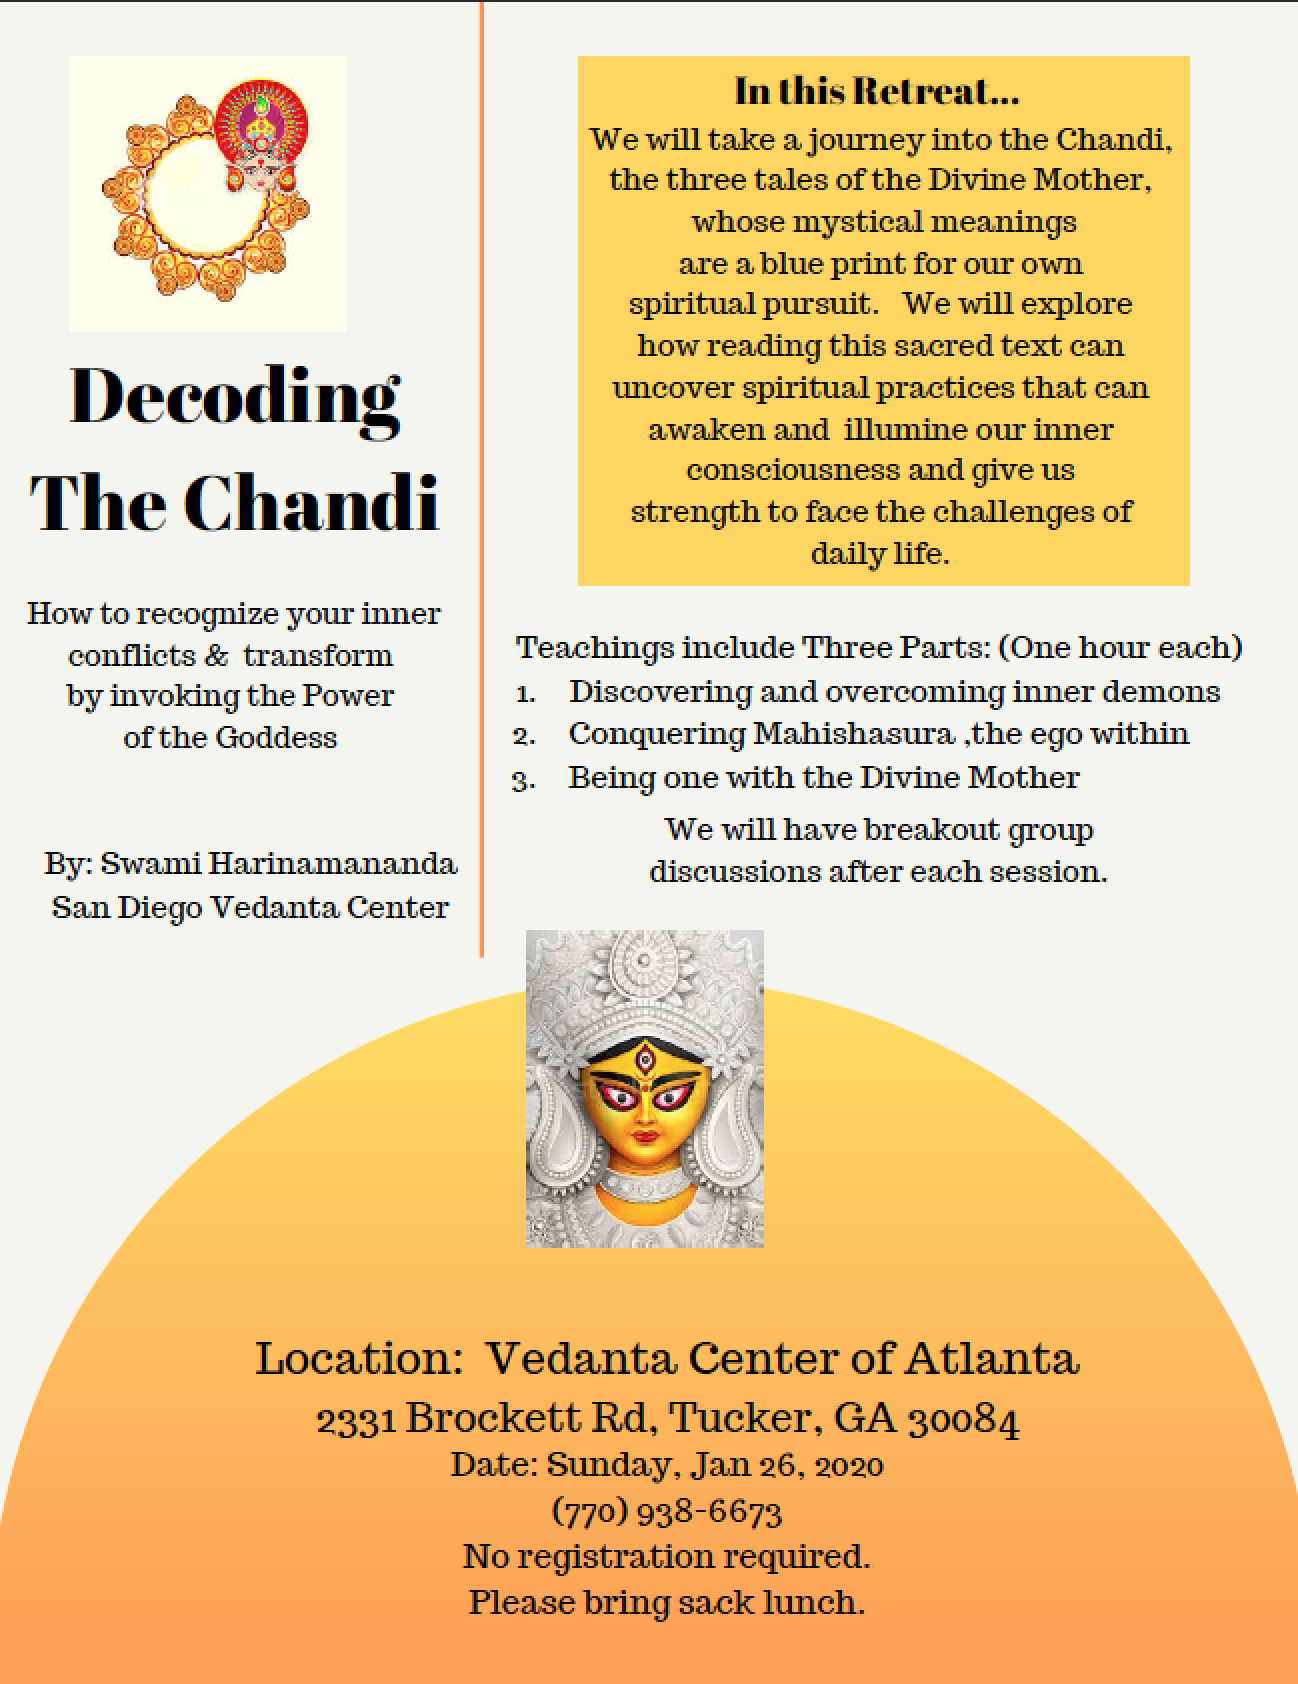 Decoding the Chandi flyer image link_